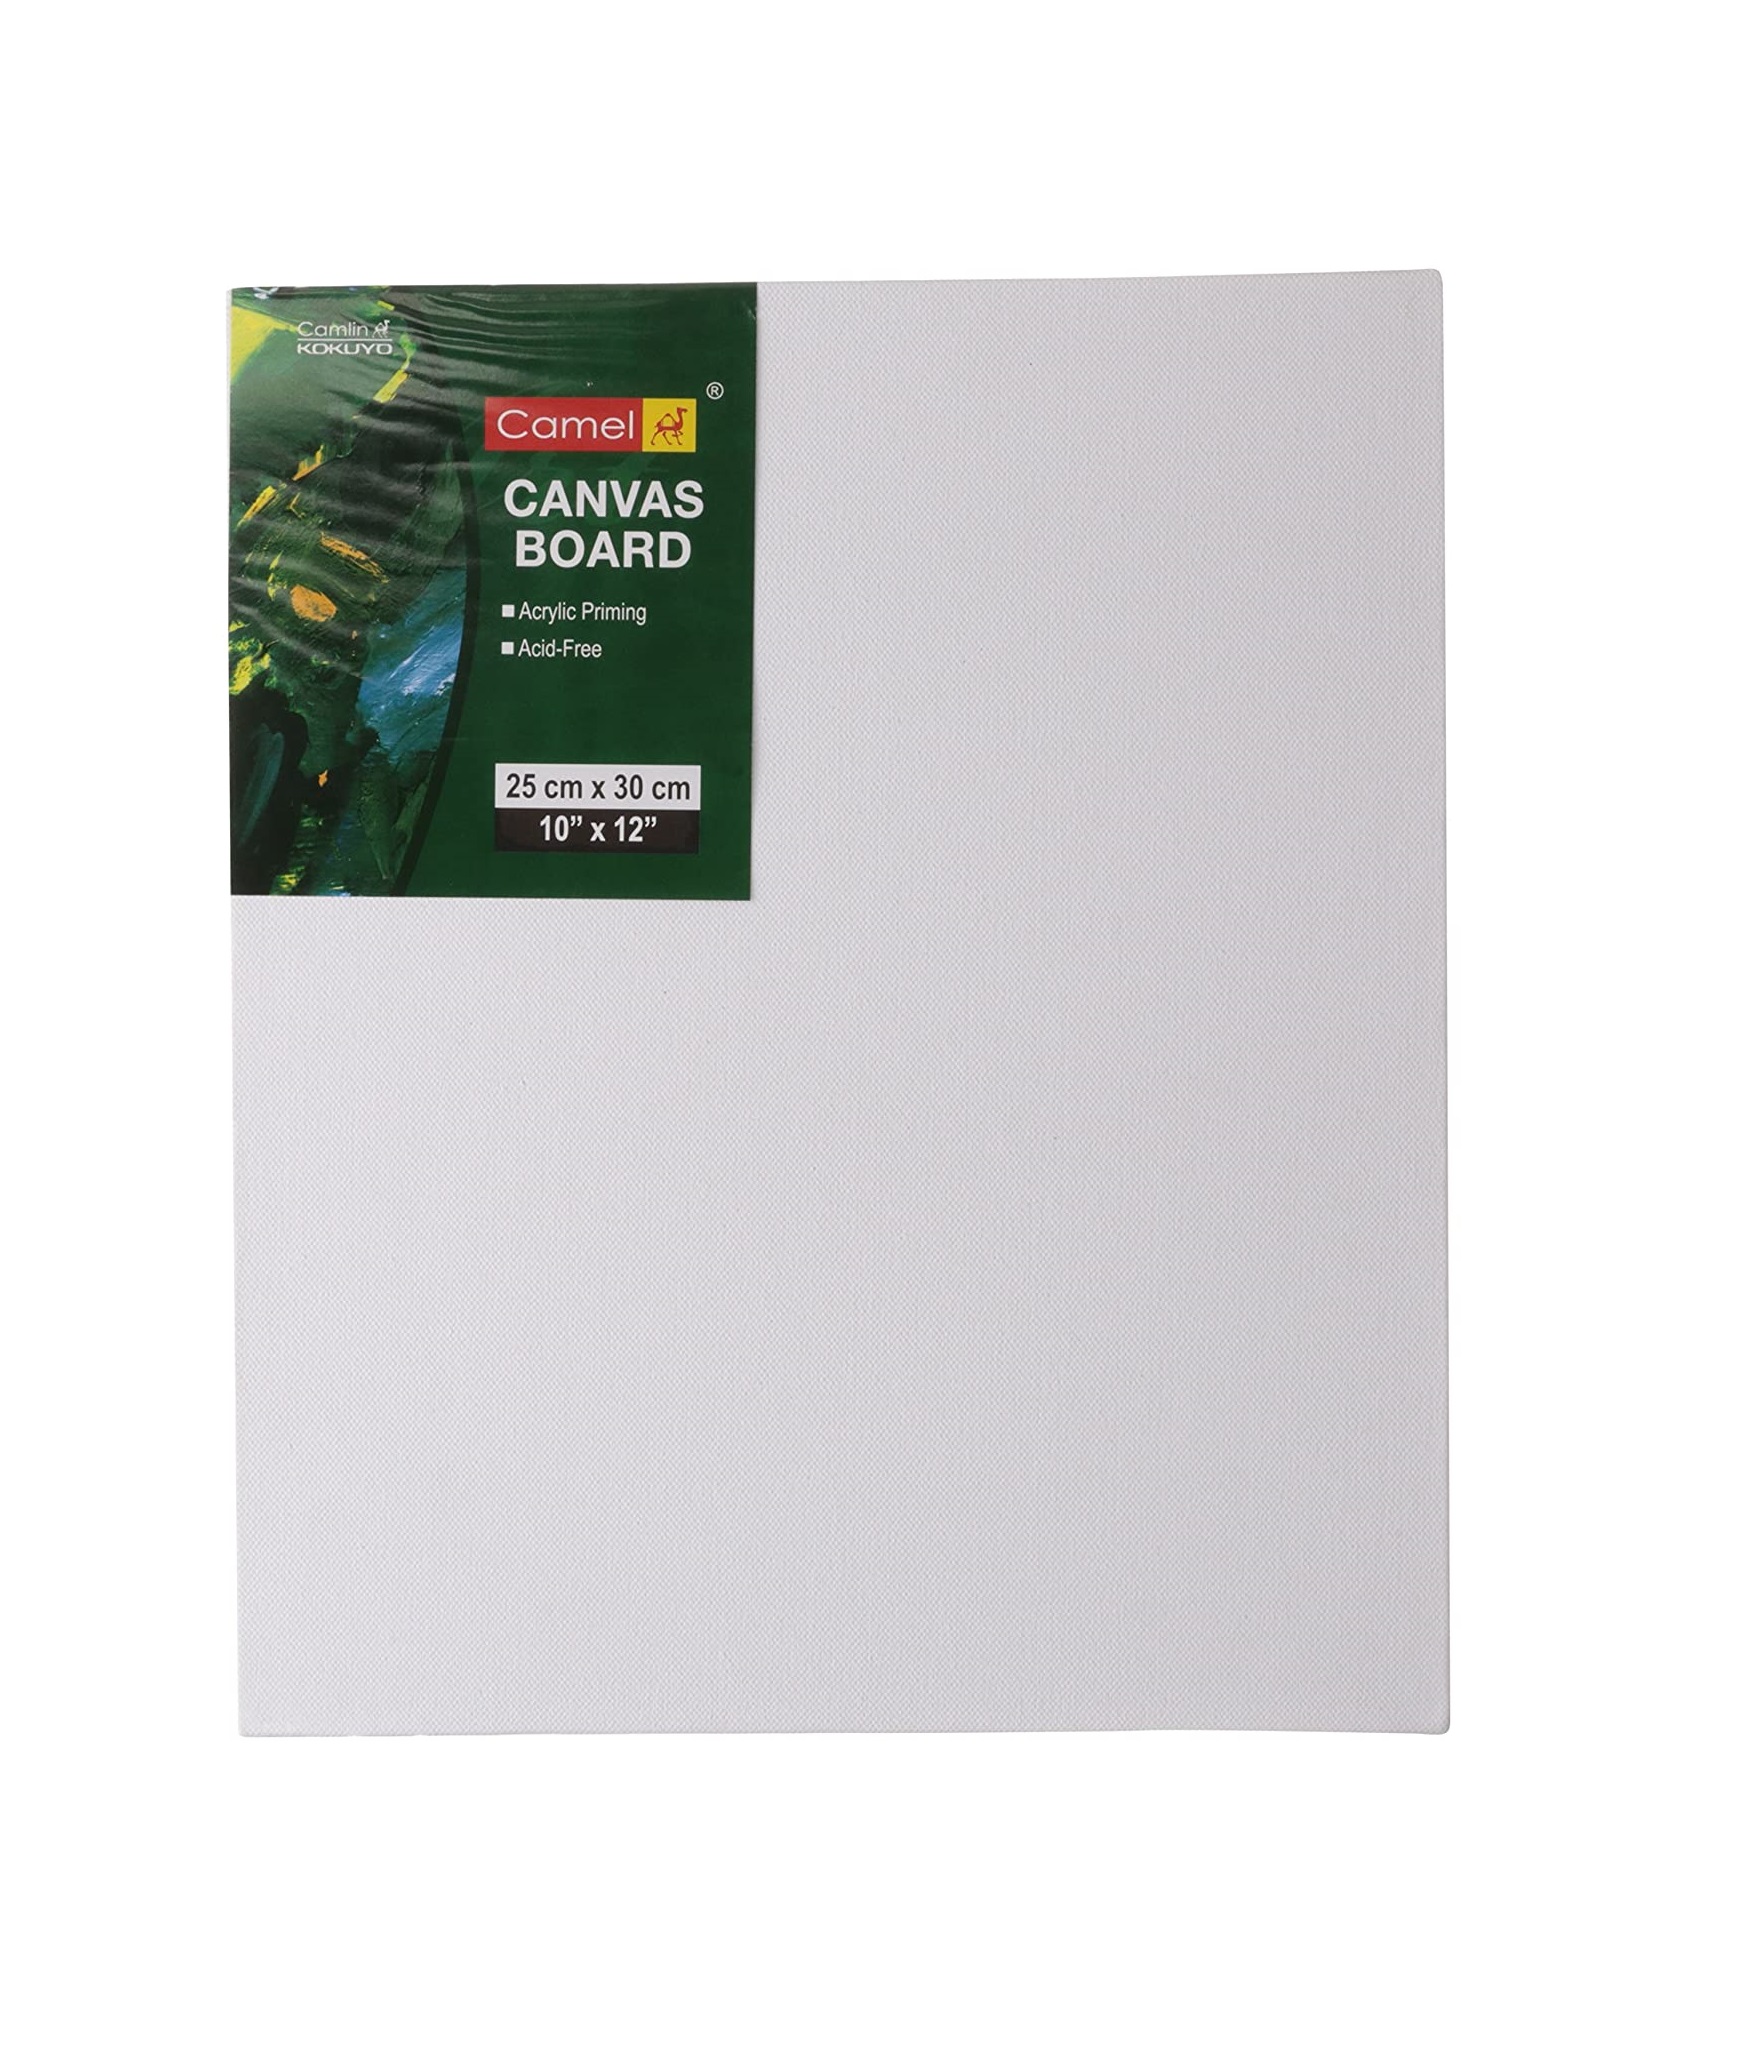 Camel Canvas Board - 25cm x 30cm